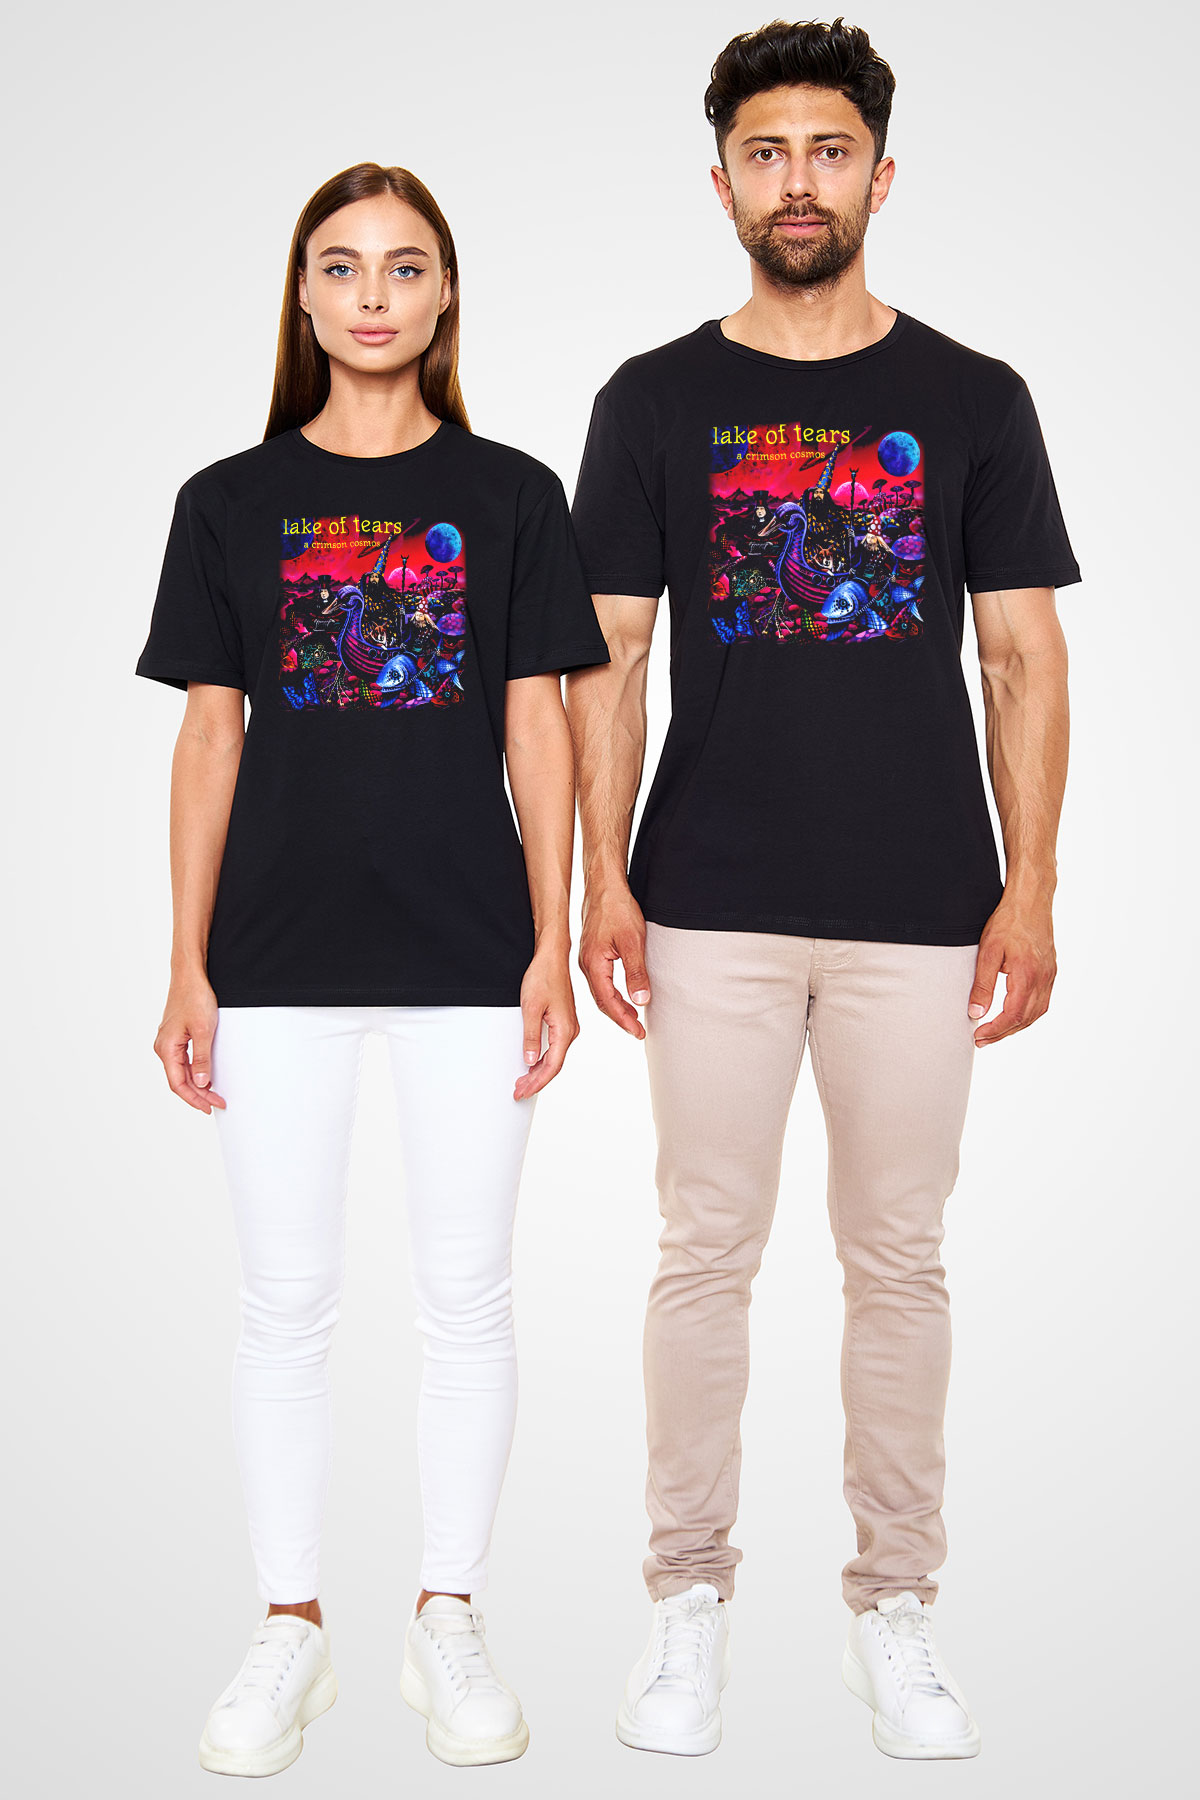 Lake of Tears Black Unisex T-Shirt - Tees - Shirts